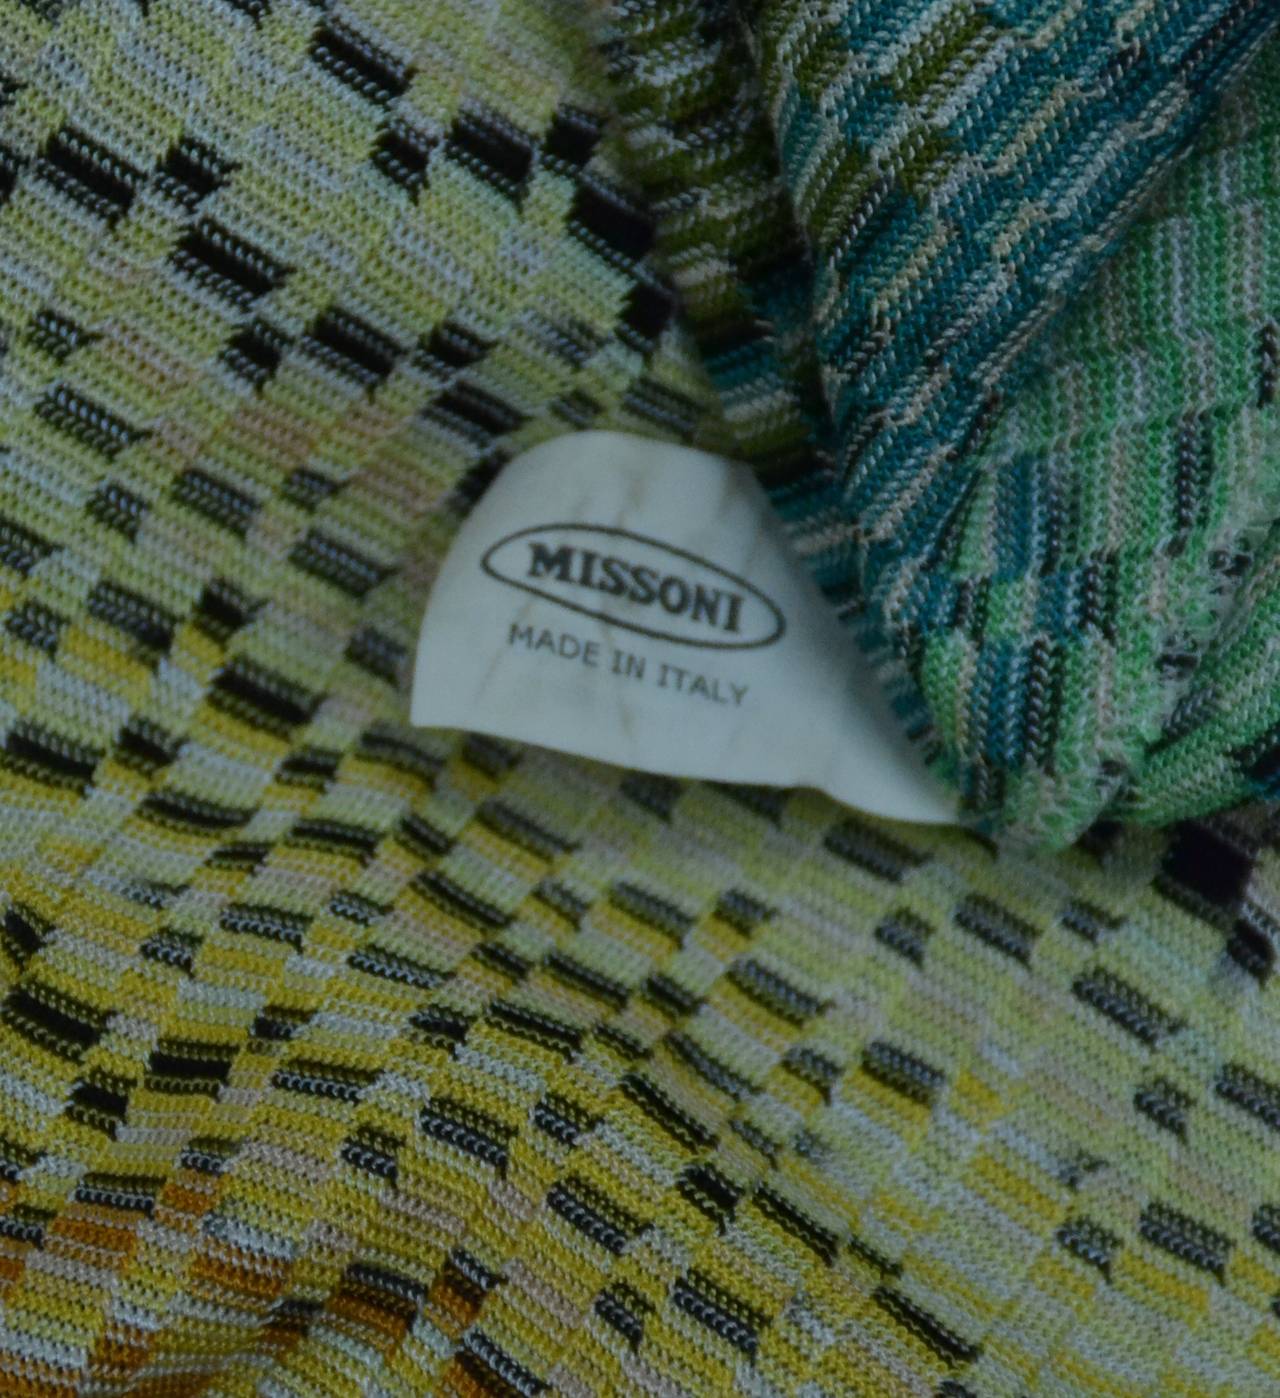 1980s Missoni Multi Color Knit Halter Dress with Fringe For Sale at ...